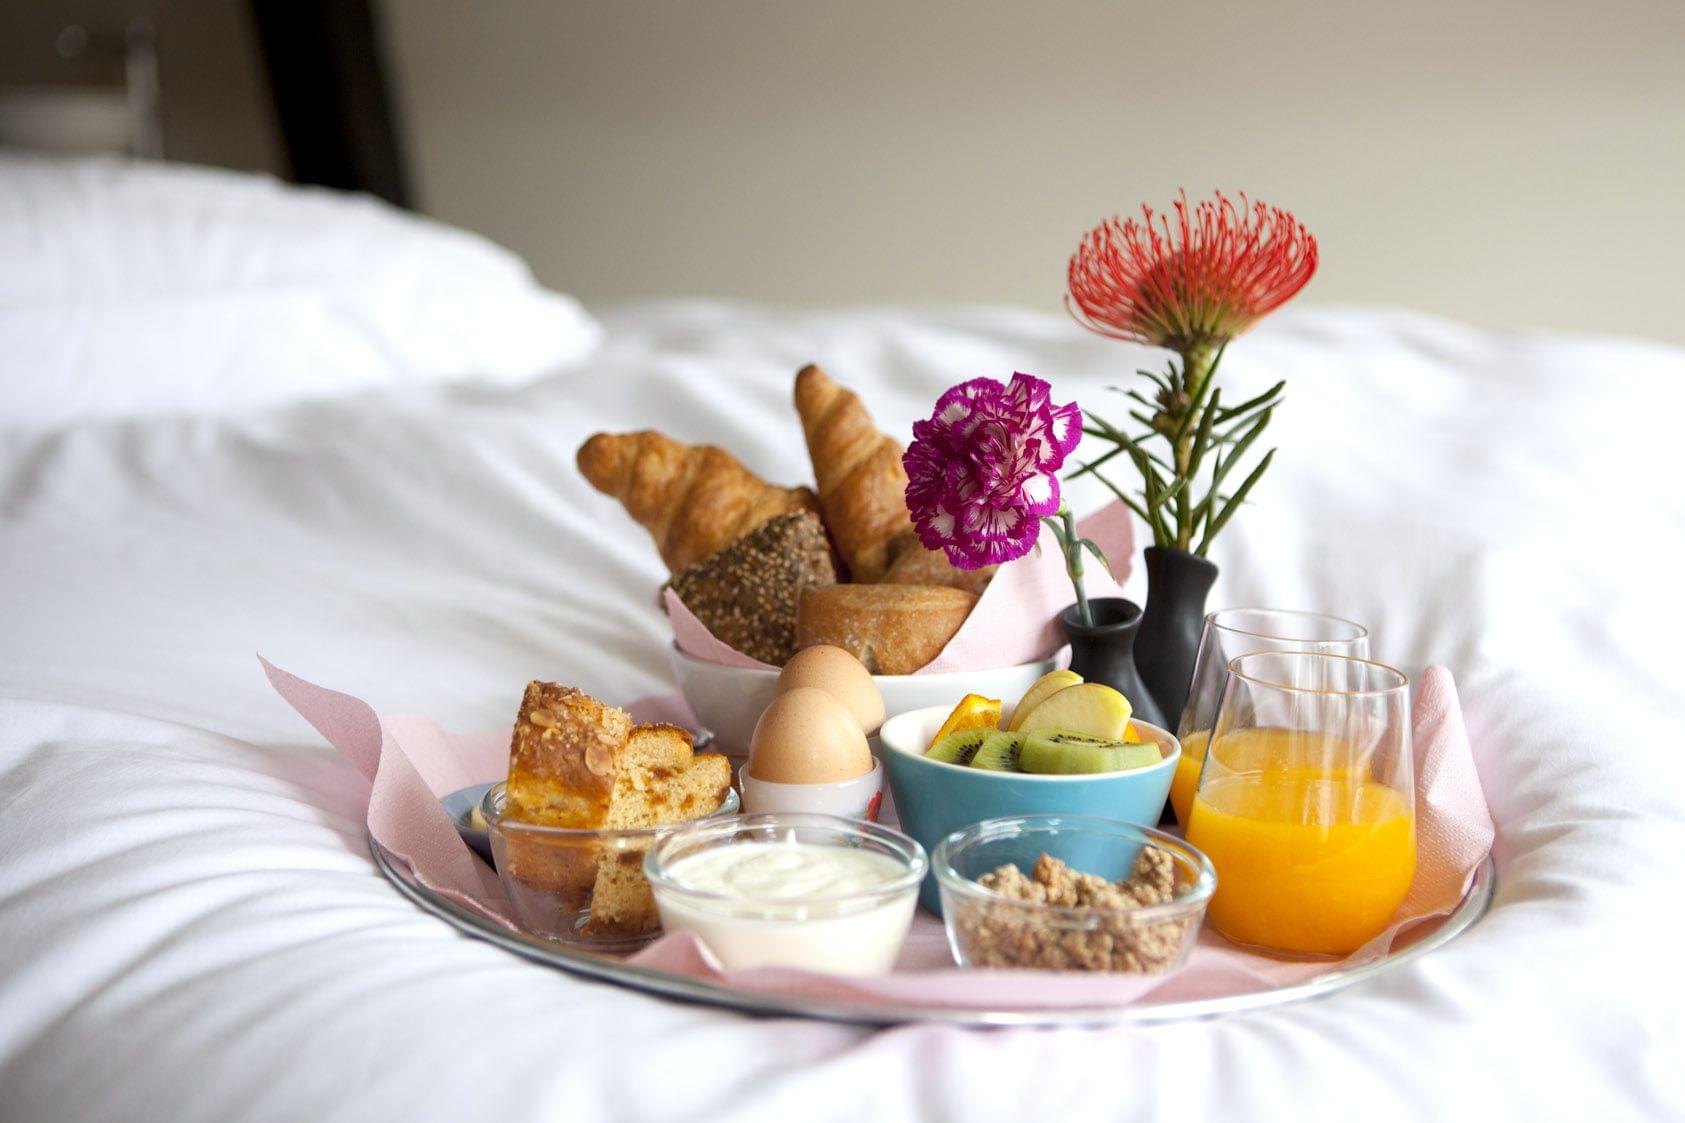 Foto: 000Sandra/moederdag-ontbijt-op-bed-croissant-servies.jpg